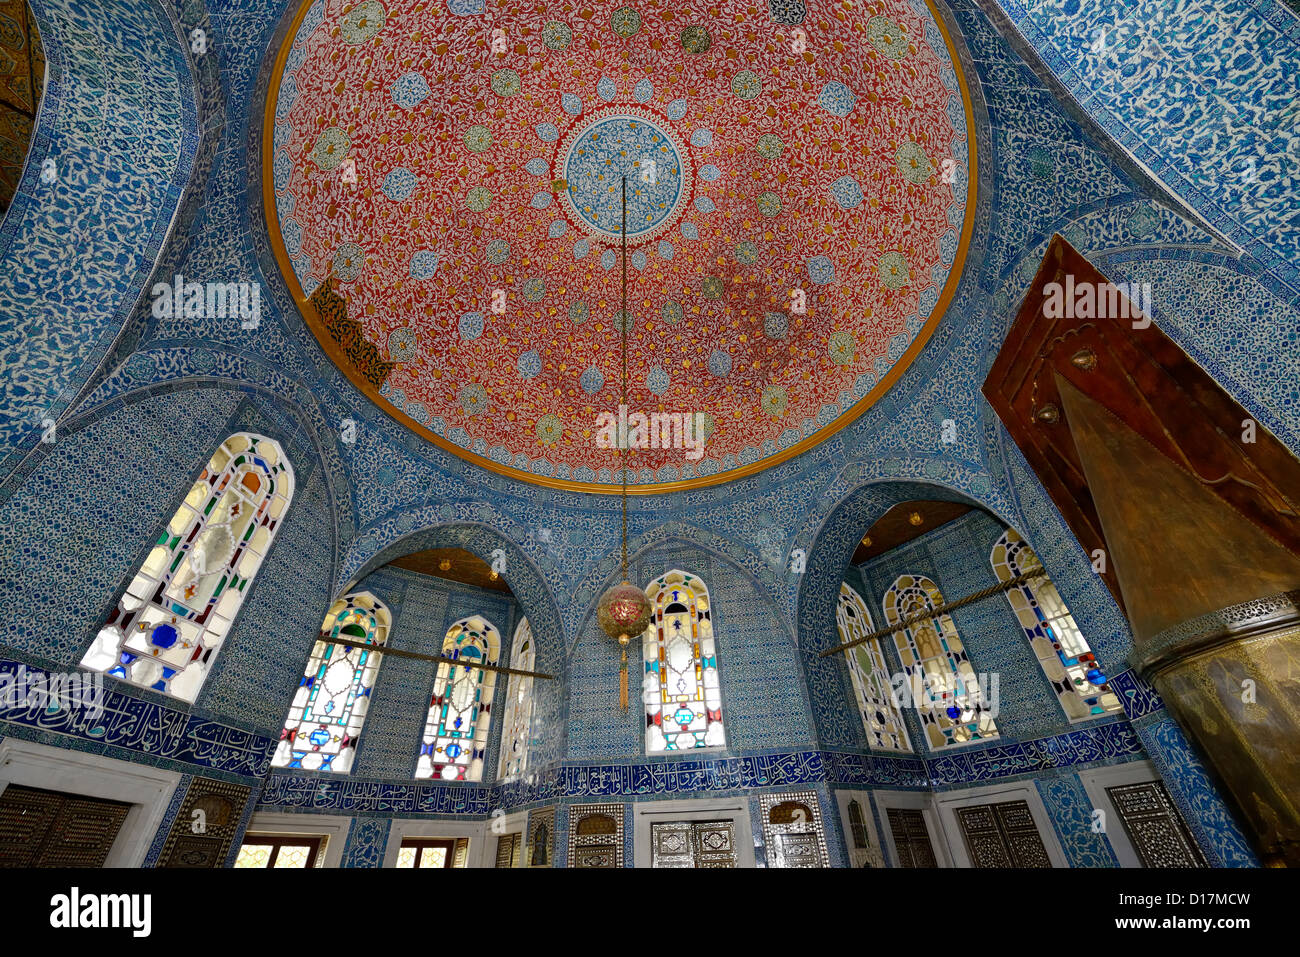 Reich verzierten Kuppeldecke der Bagdad Kiosk im Topkapi Palace Istanbul Türkei Stockfoto